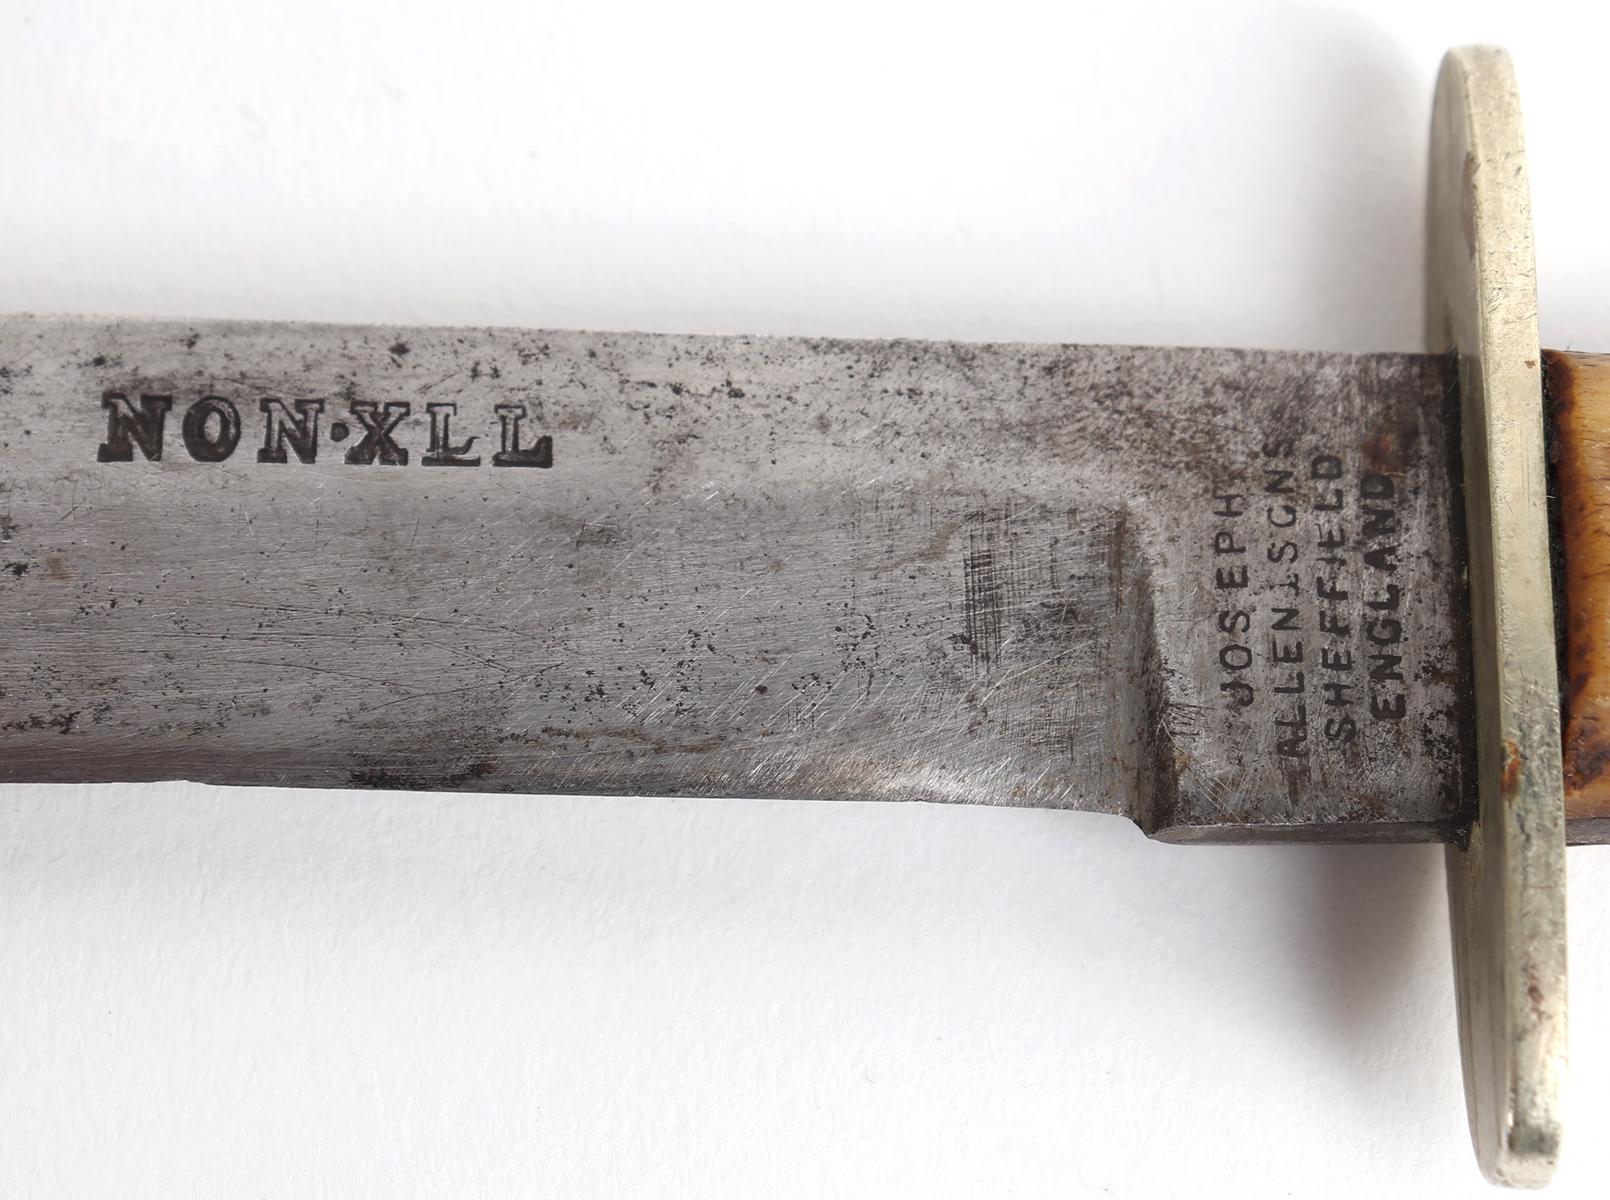 Antique Hunting Bowie Knife, Joseph Allen & Sons Sheffield England